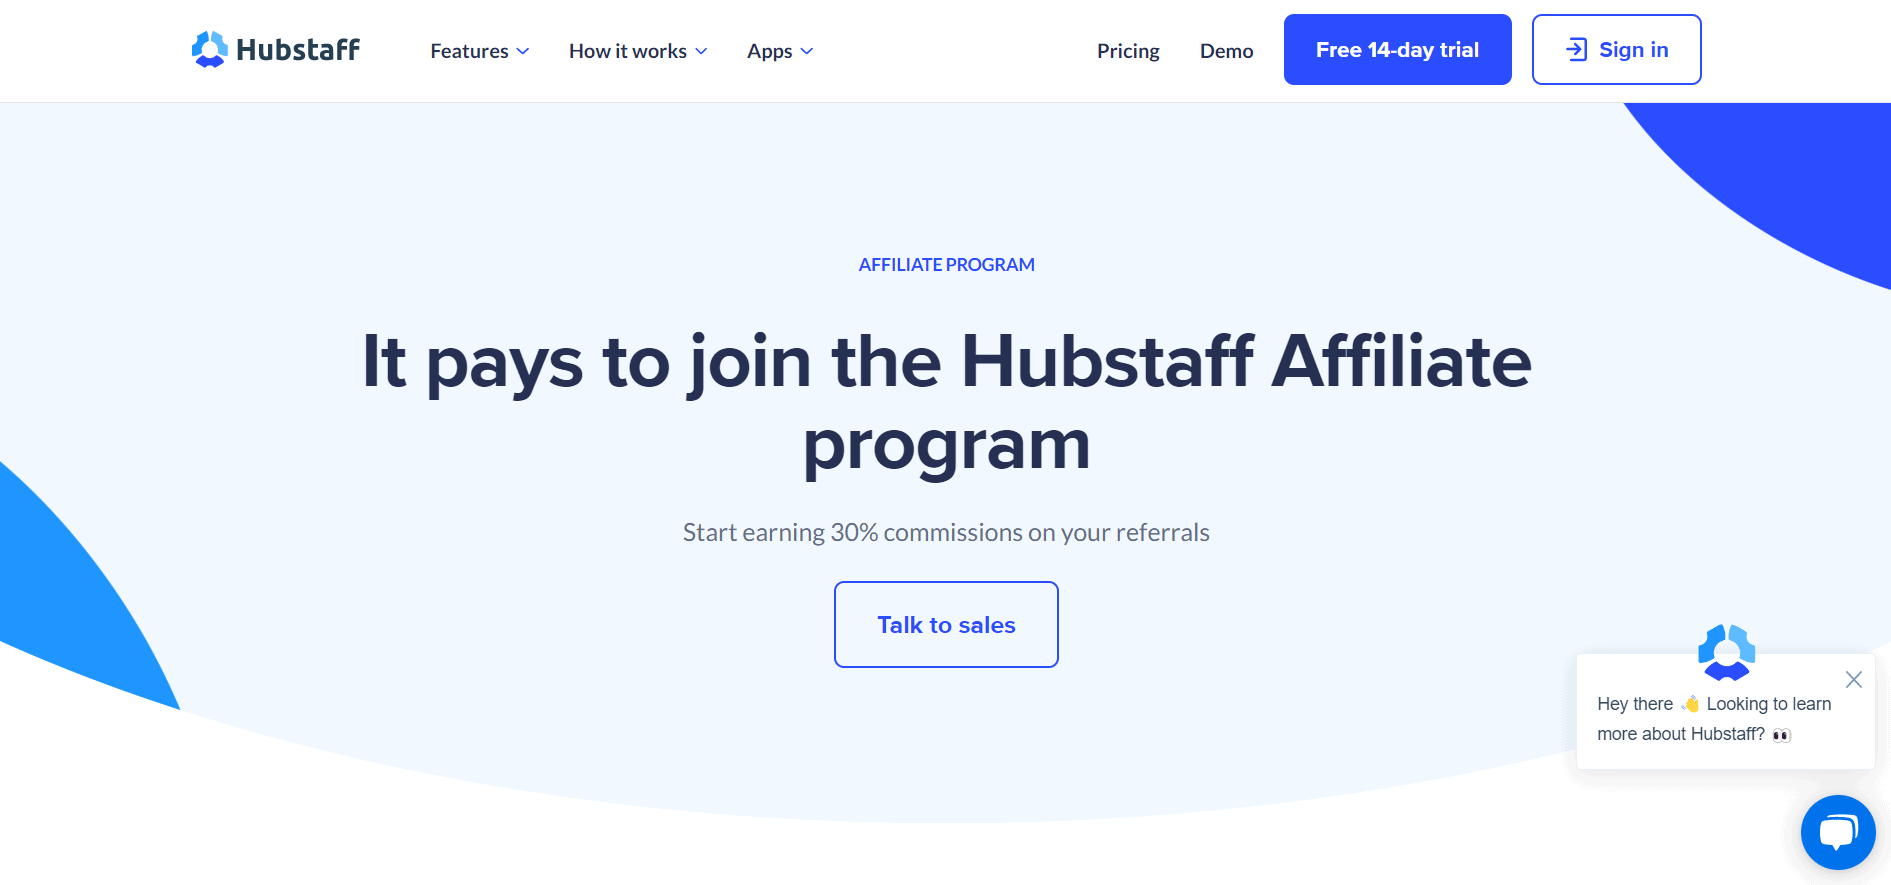 Hubstaff Affiliate Program